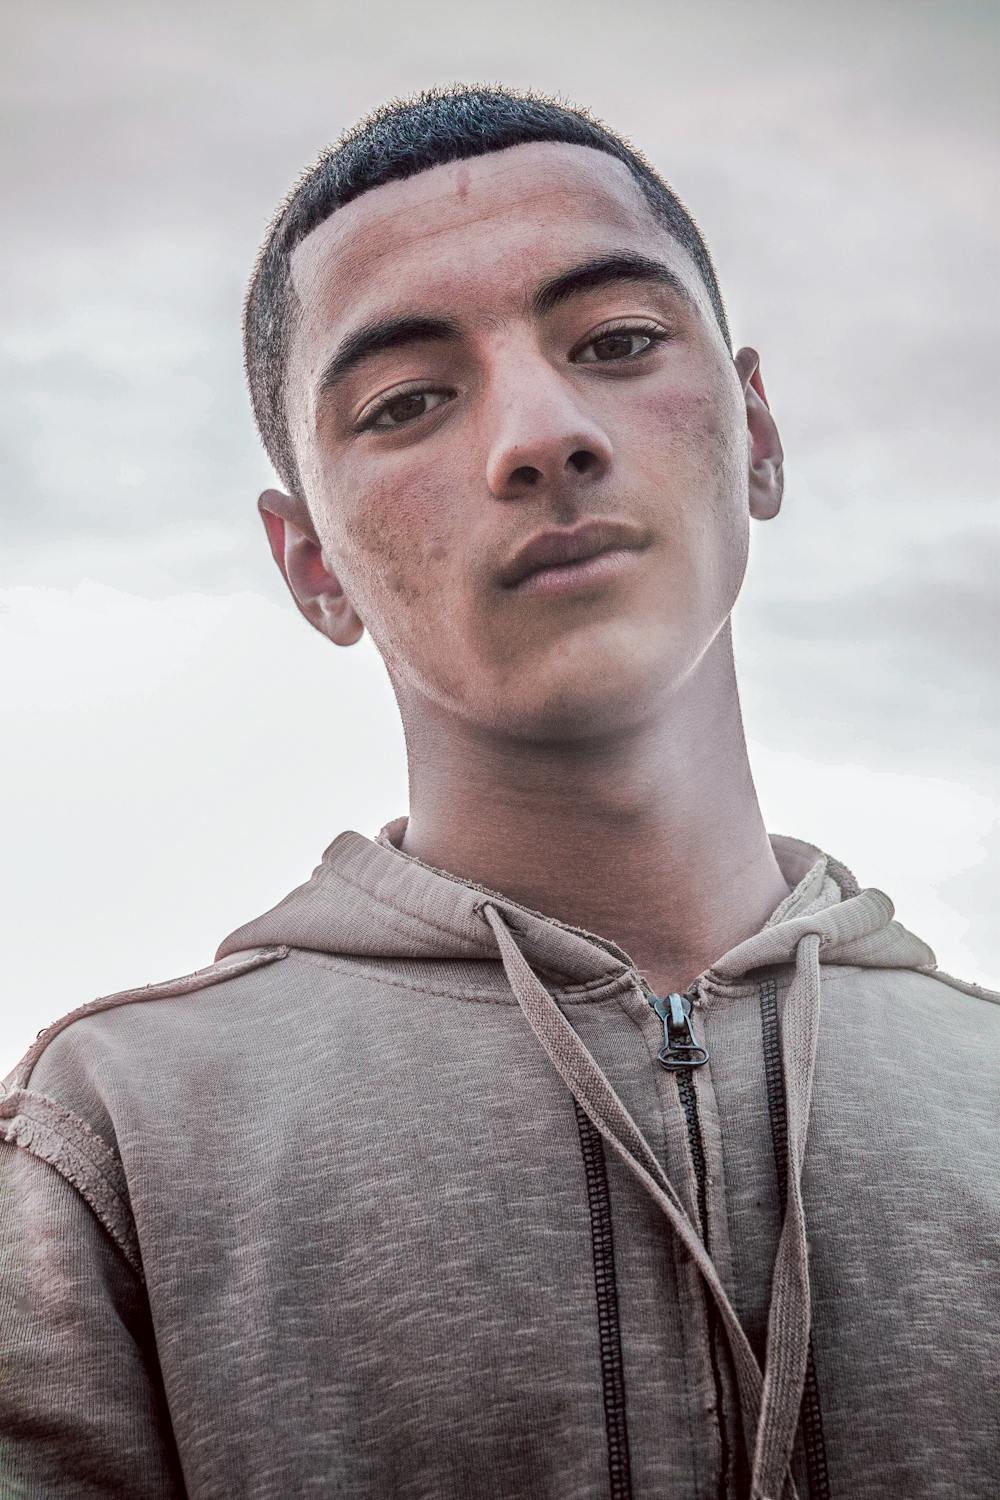 Free stock photo of 20-25 years old man, algeria, boy